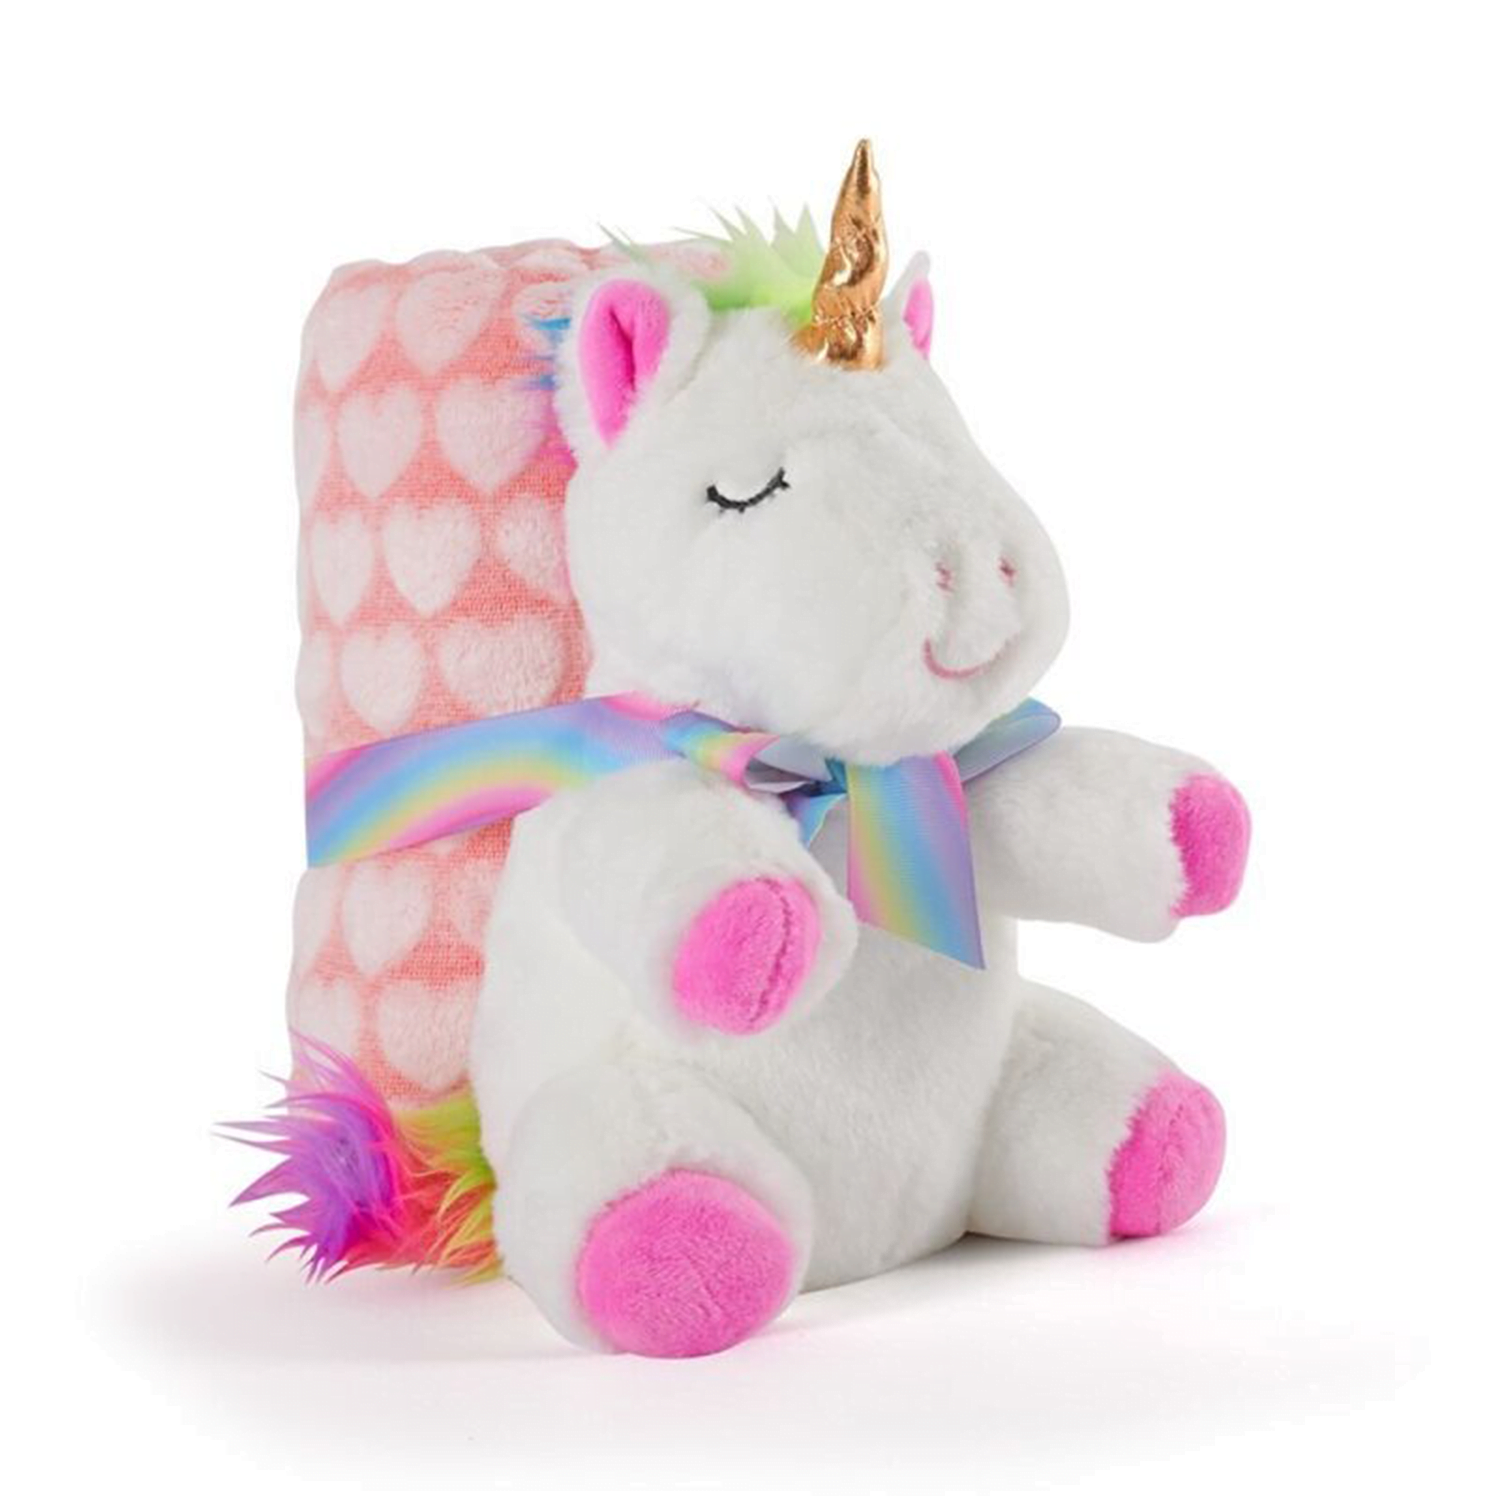 tiara-the-unicorn-soft-blanket-and-plush